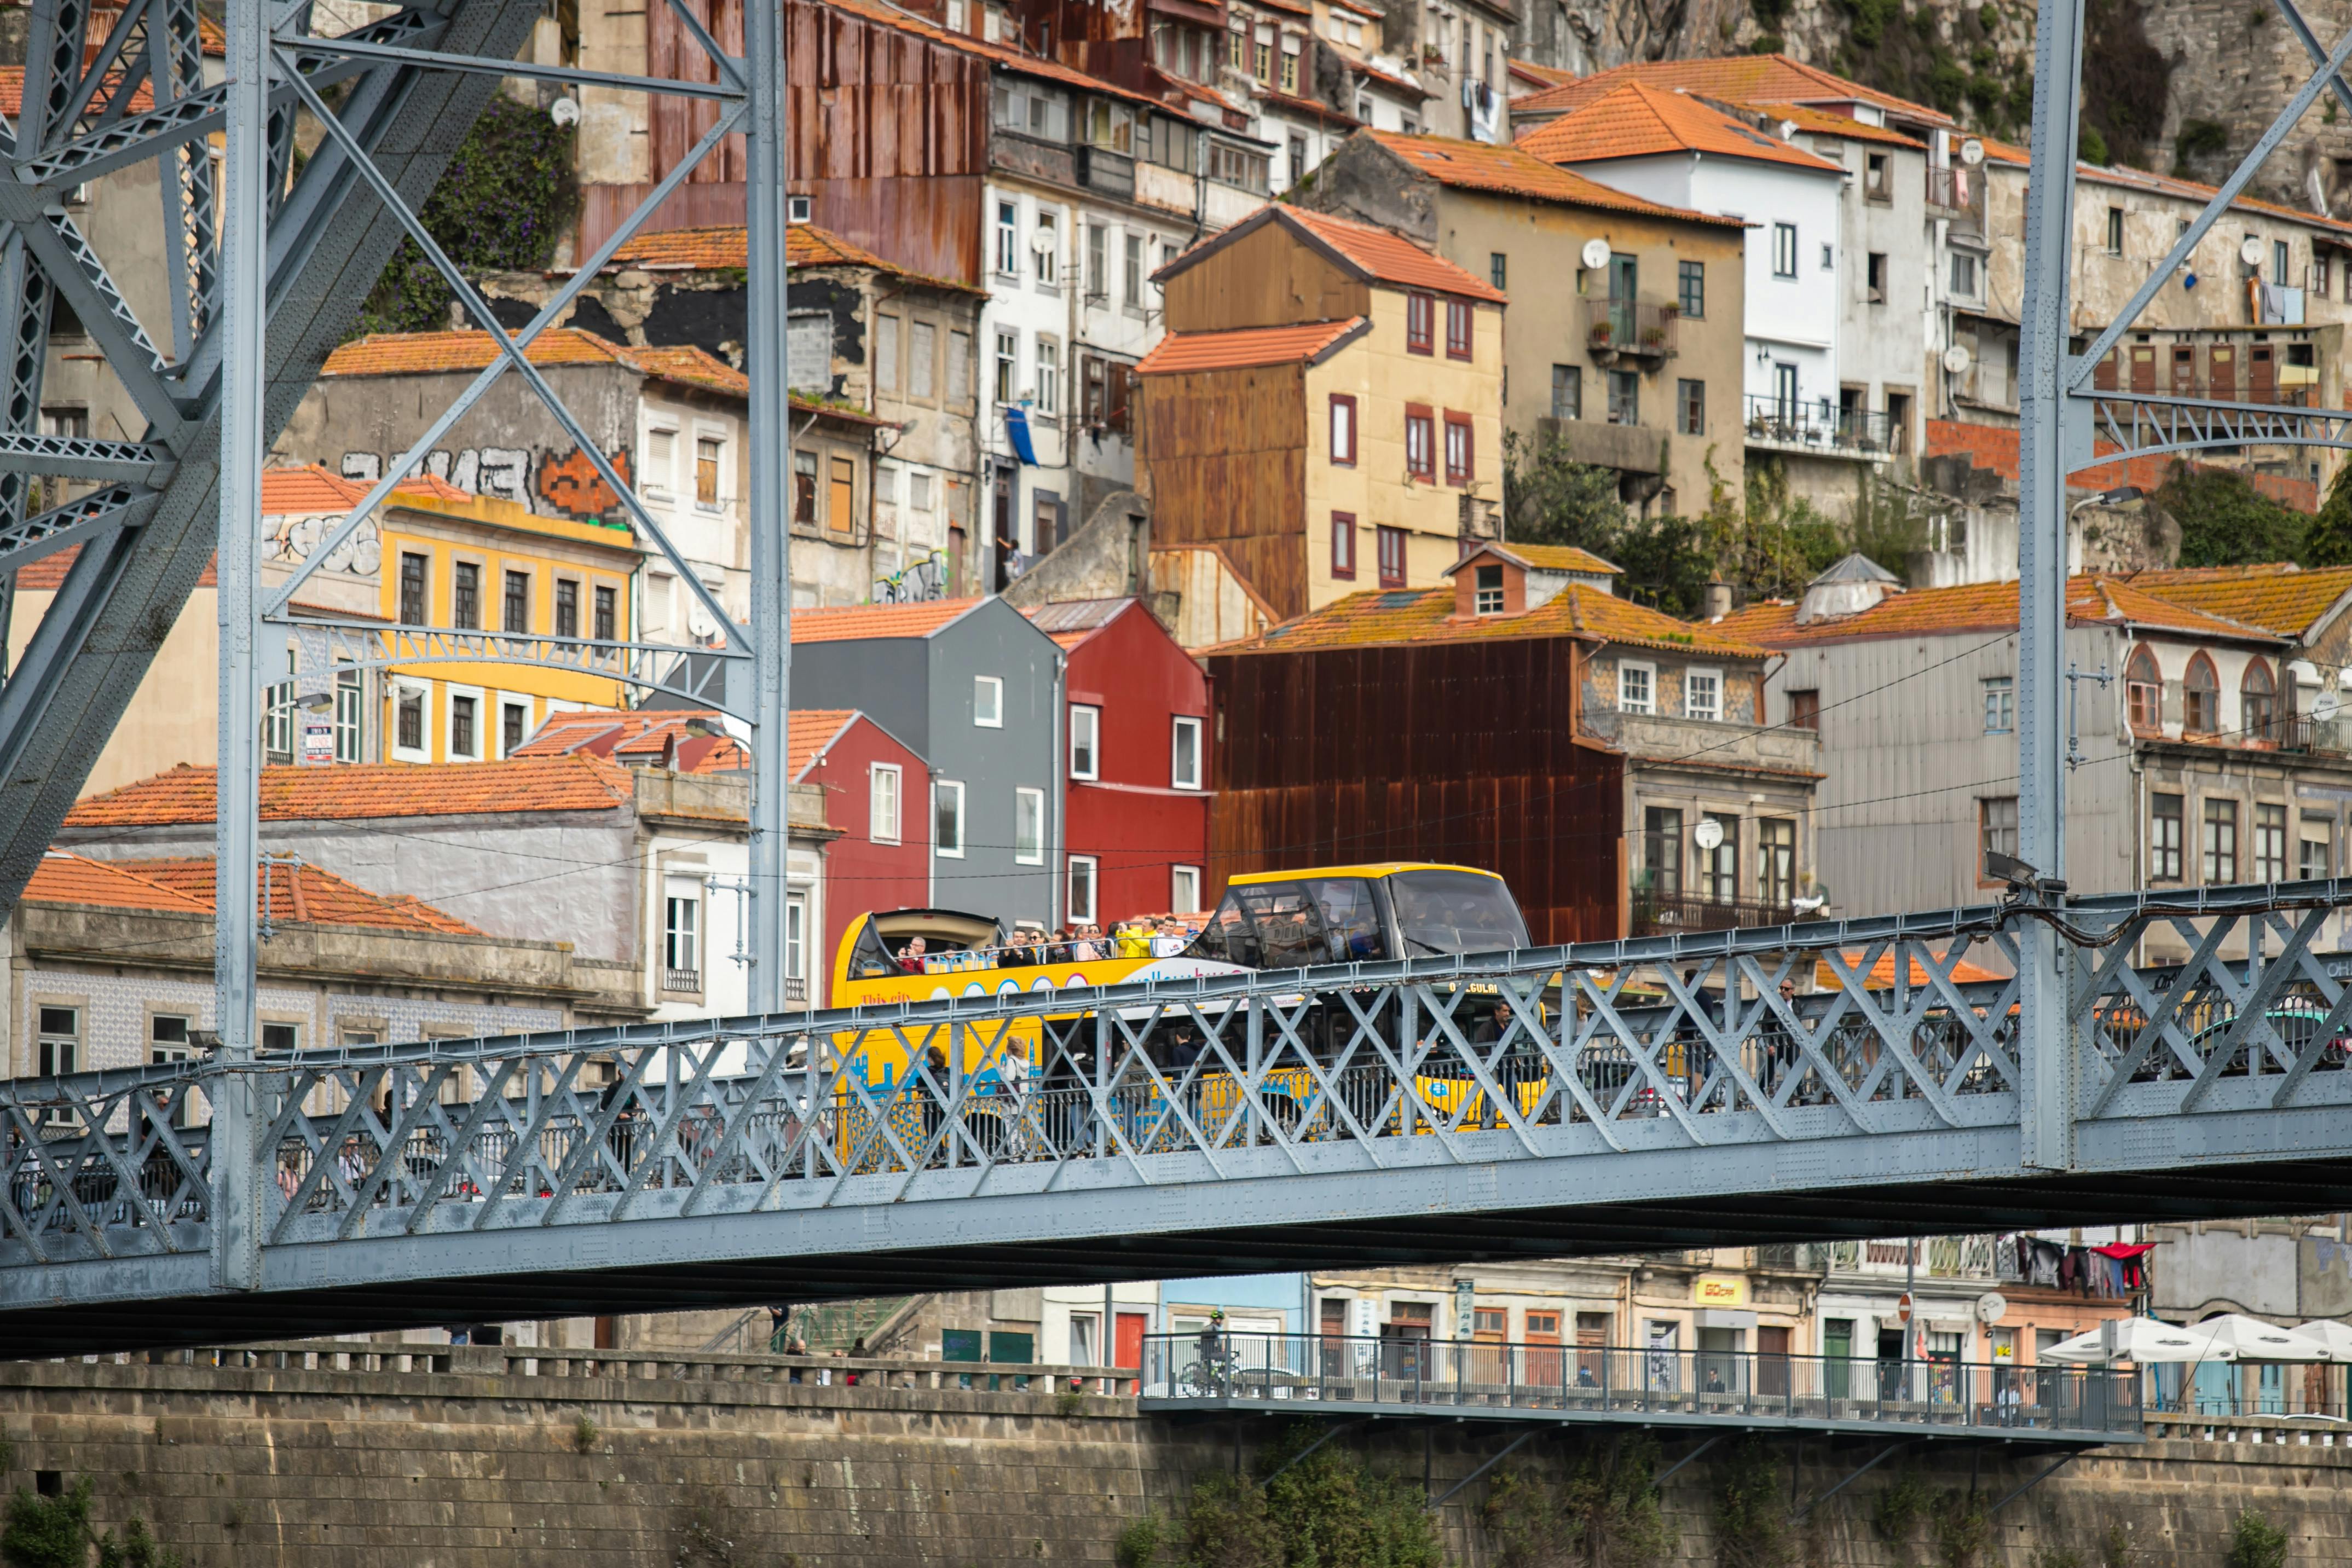 Crossing Luís I bridge - Porto Vintage Bus Tours